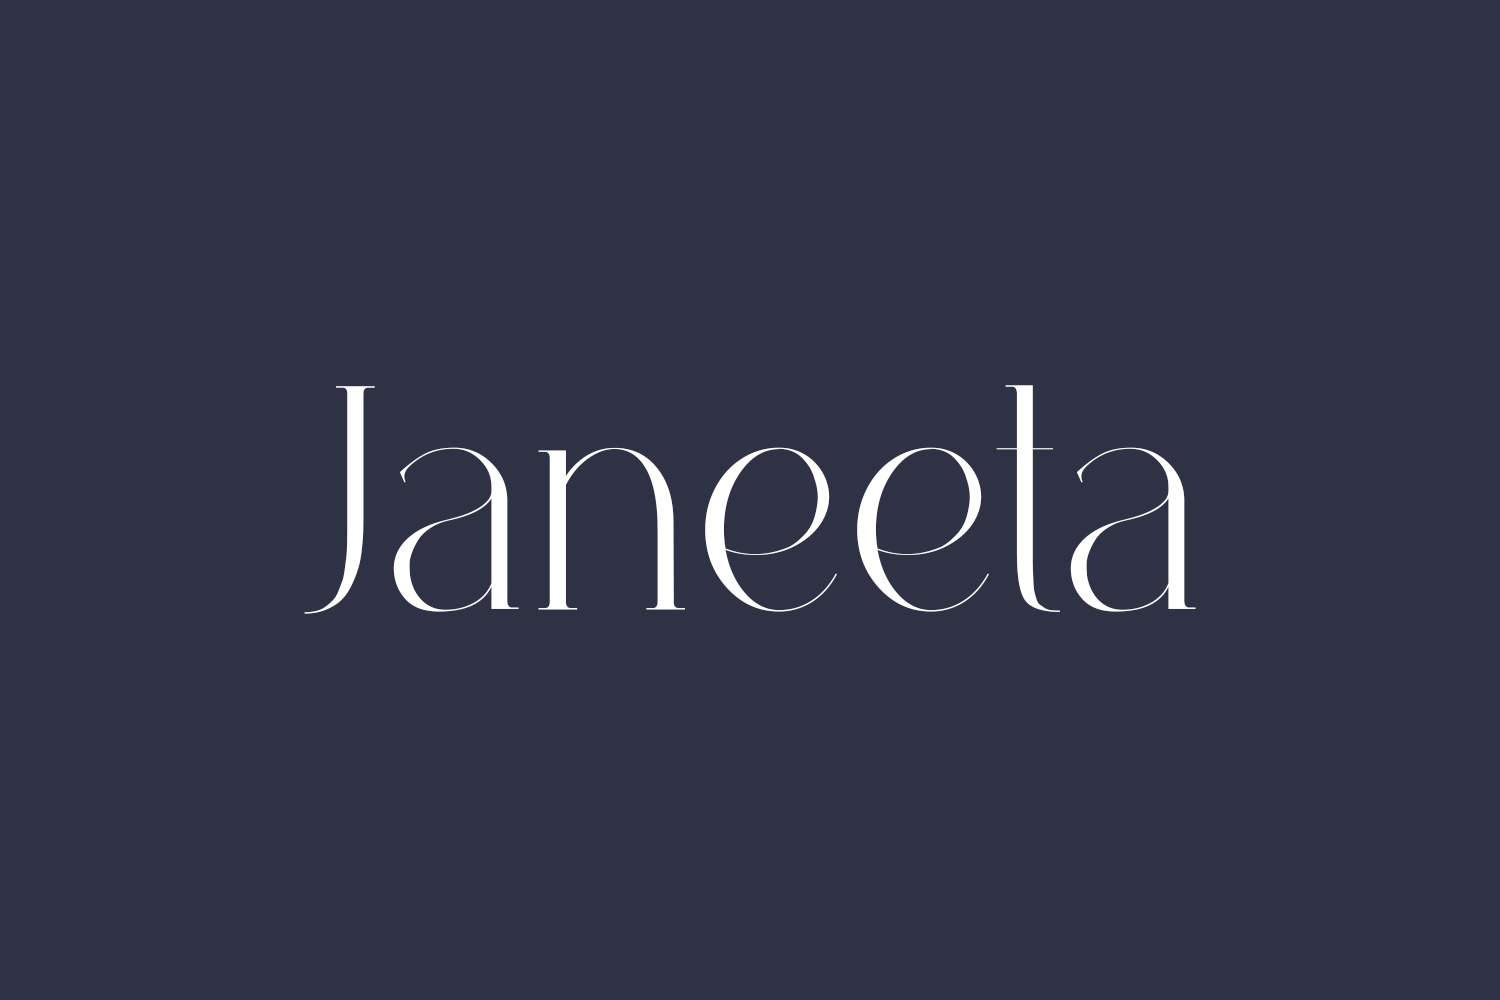 Free Janeeta Font